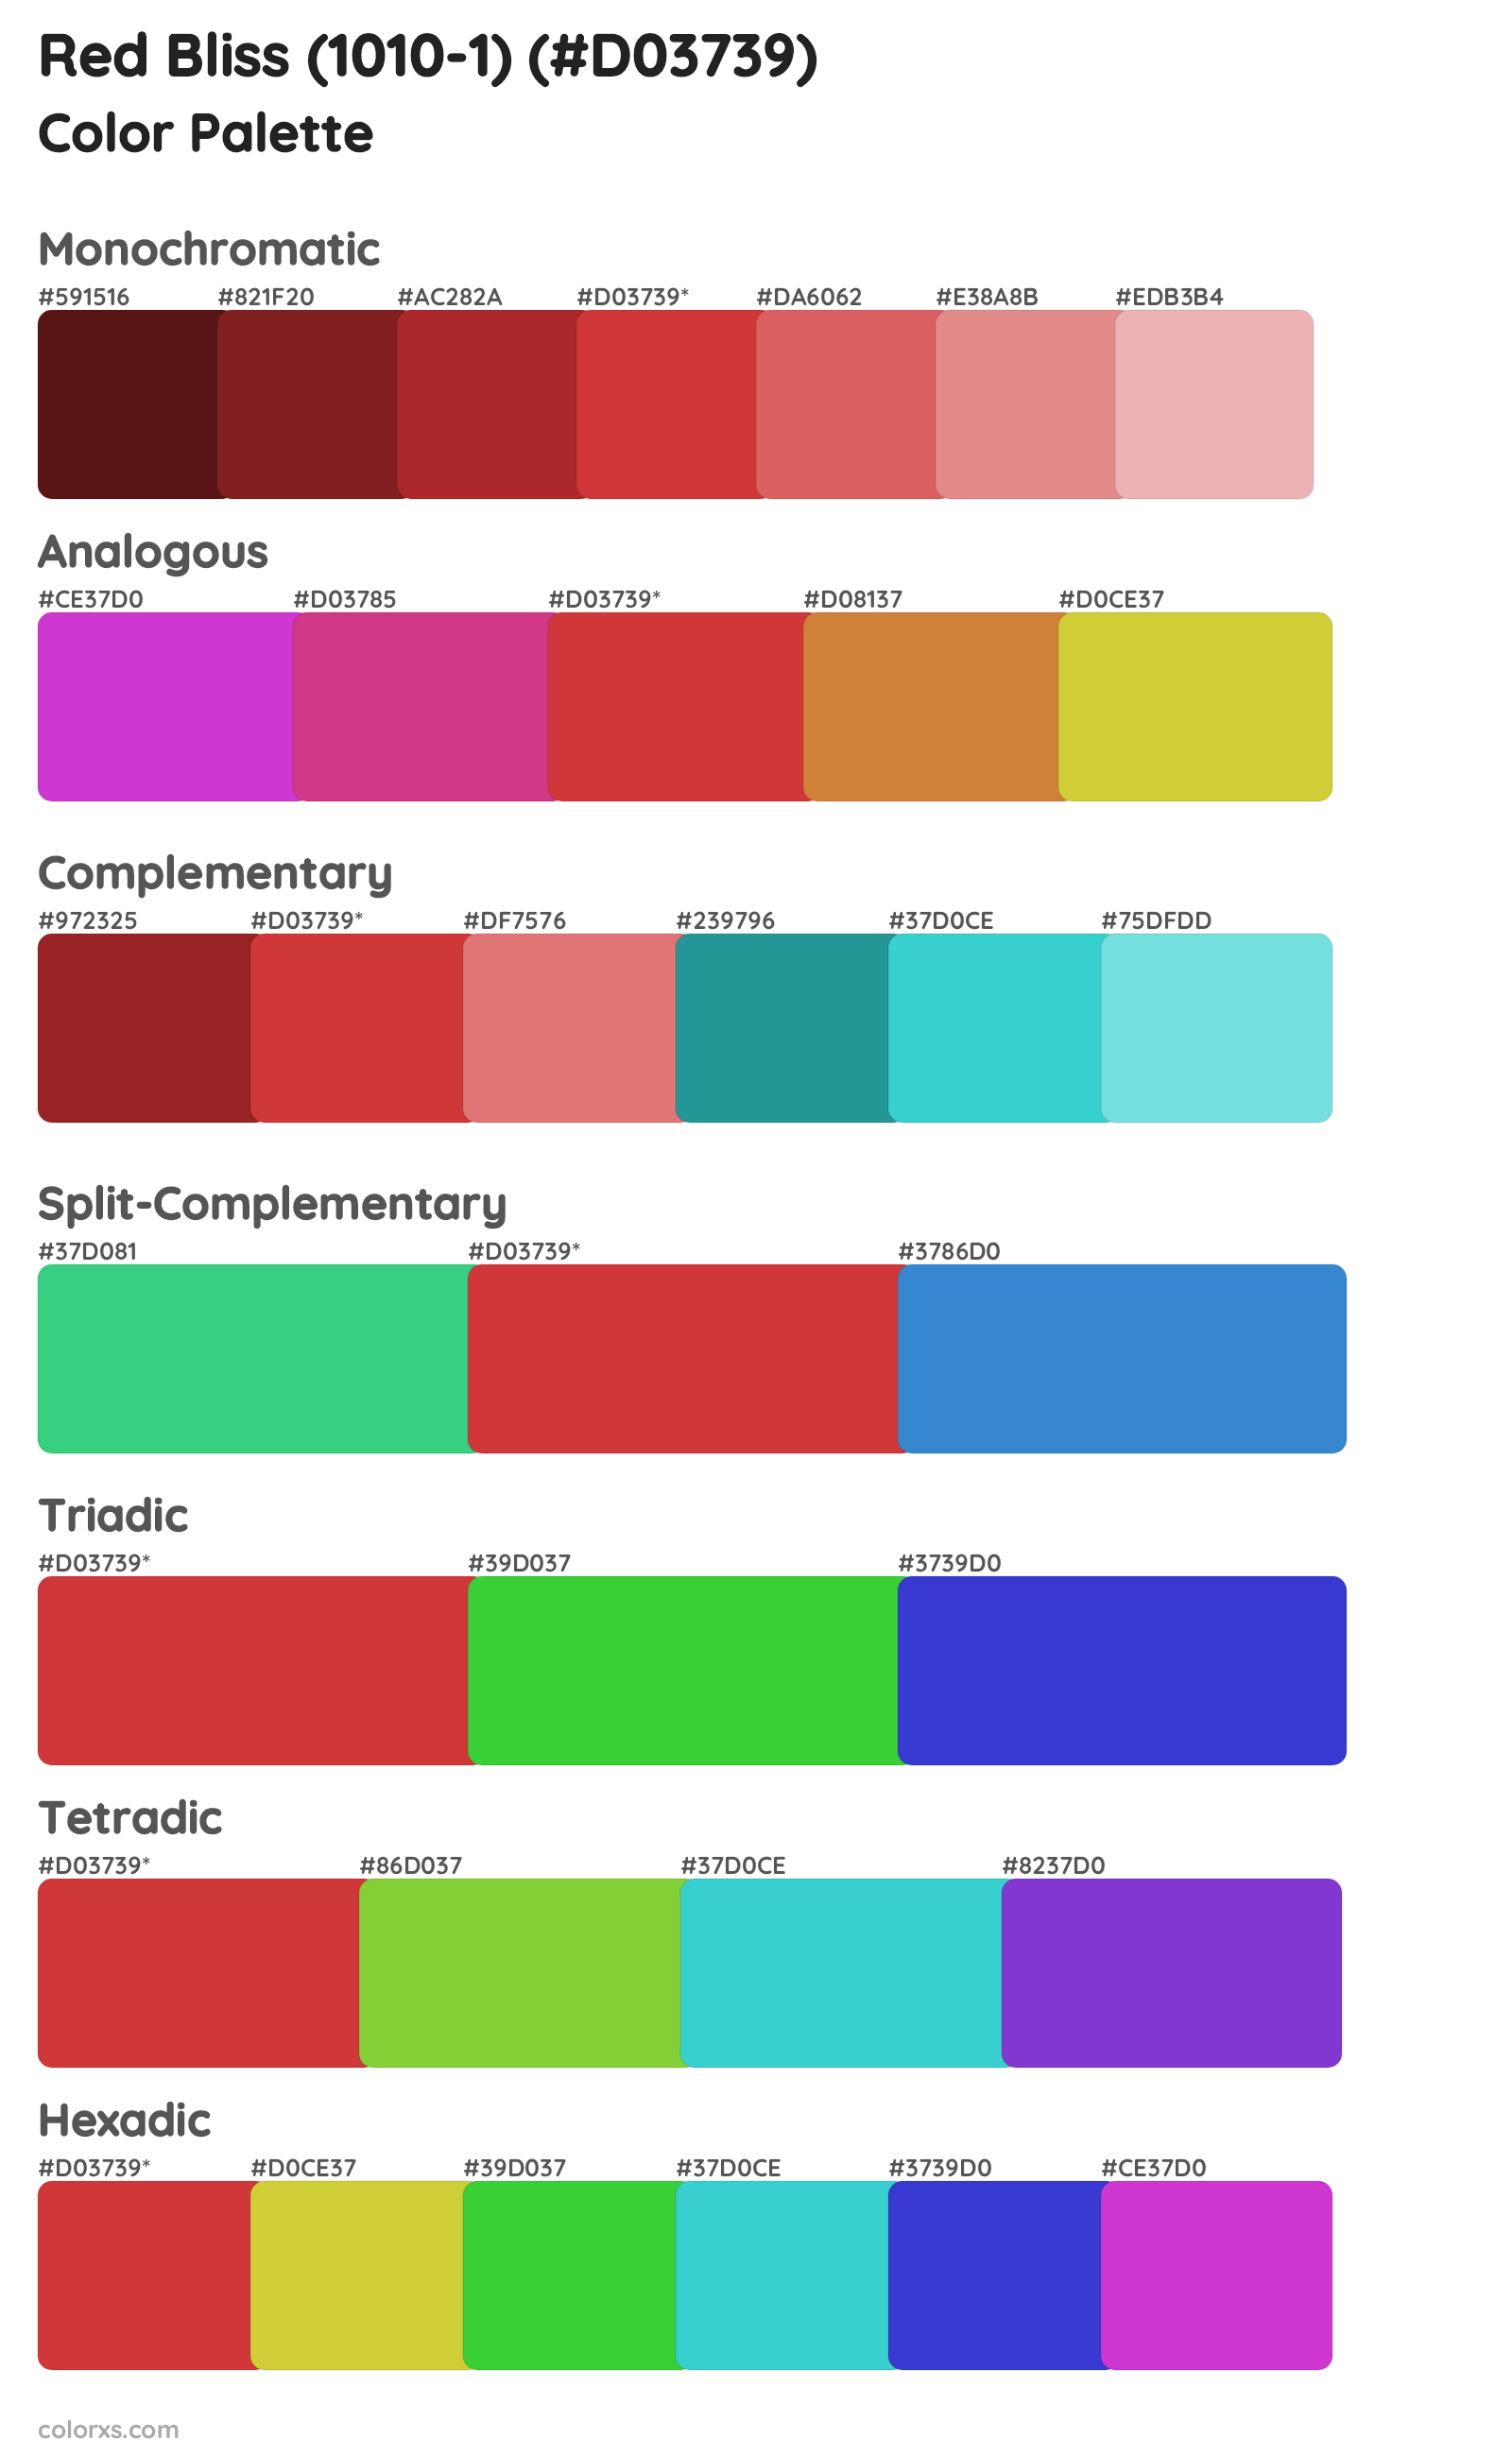 Red Bliss (1010-1) Color Scheme Palettes